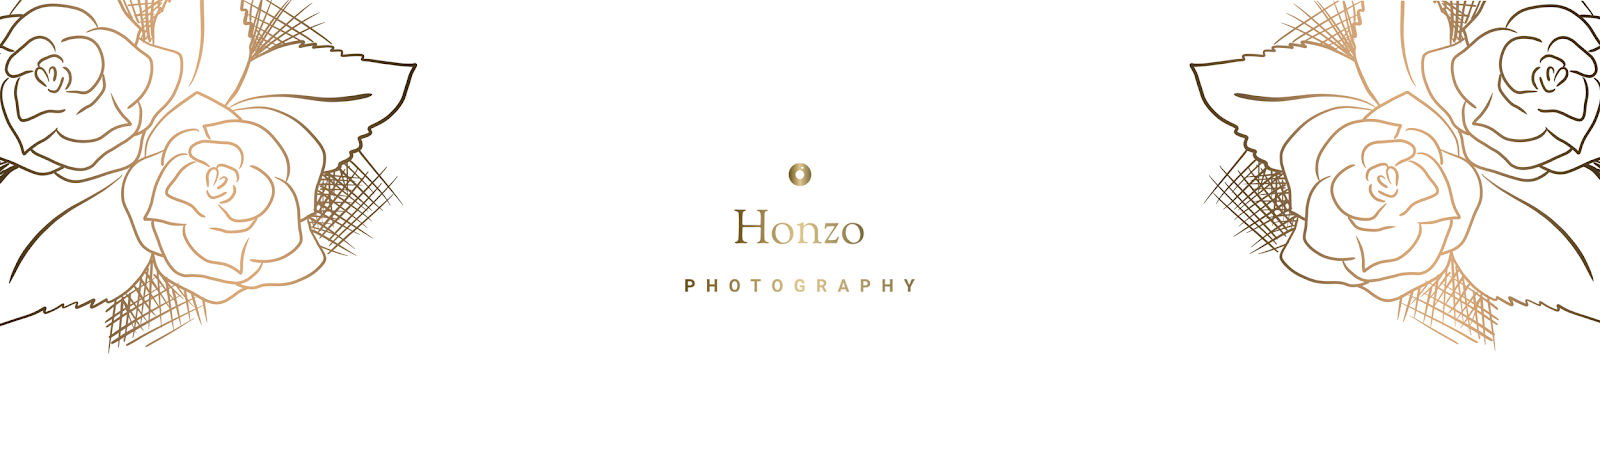 Honzo Photography